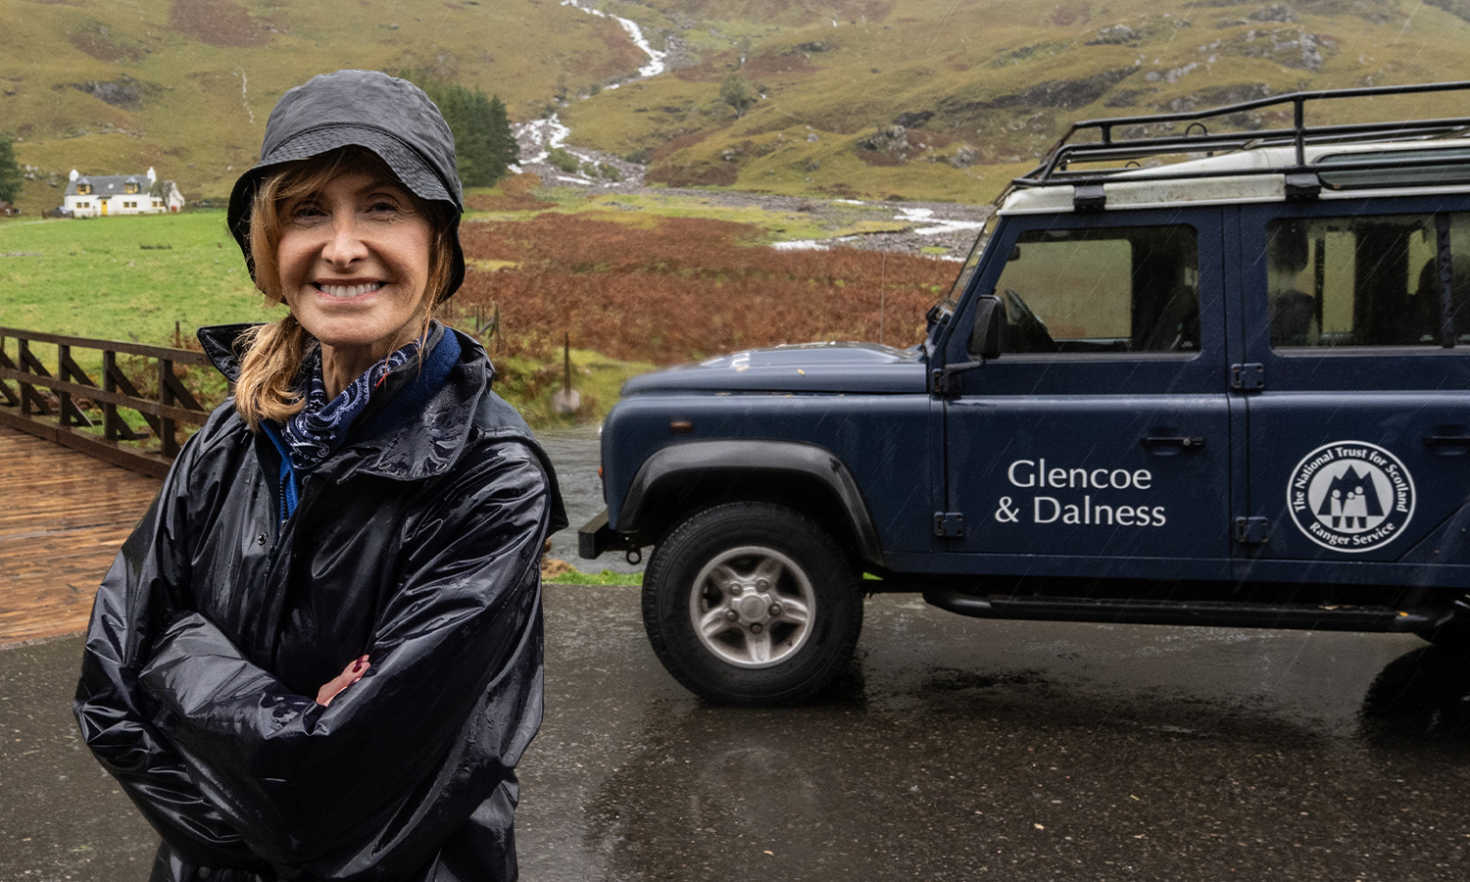 New National Trust for Scotland President, Jackie Bird, 'drinks in' the Glencoe weather. Photograph: Iain Ferguson, The Write Image